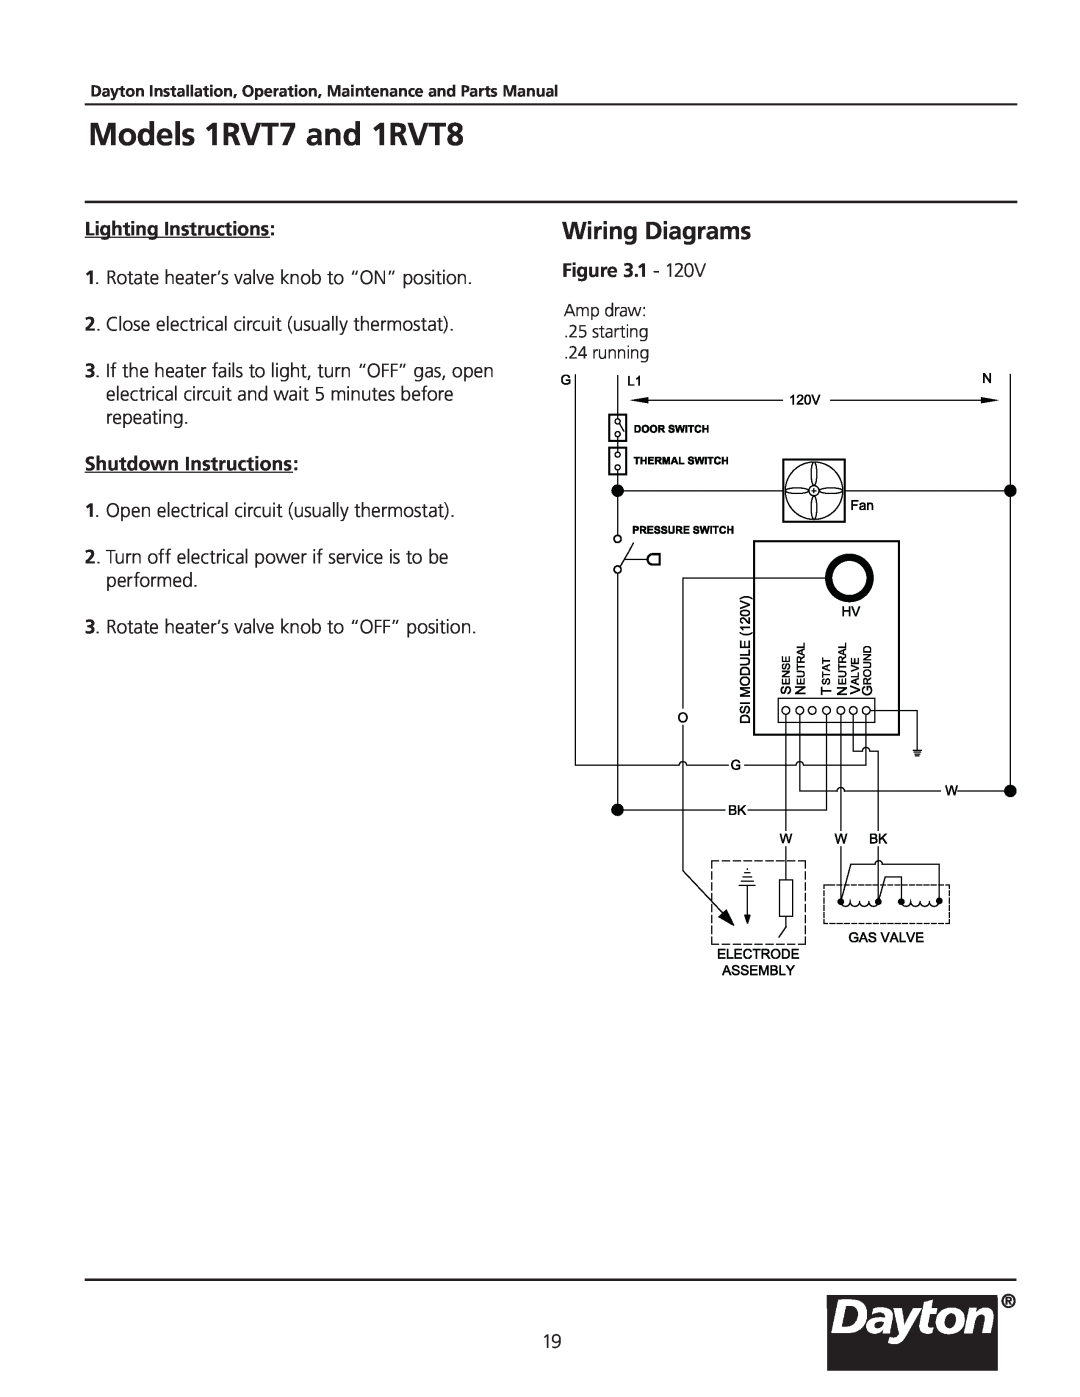 Dayton manual Wiring Diagrams, Models 1RVT7 and 1RVT8, Lighting Instructions, Shutdown Instructions 